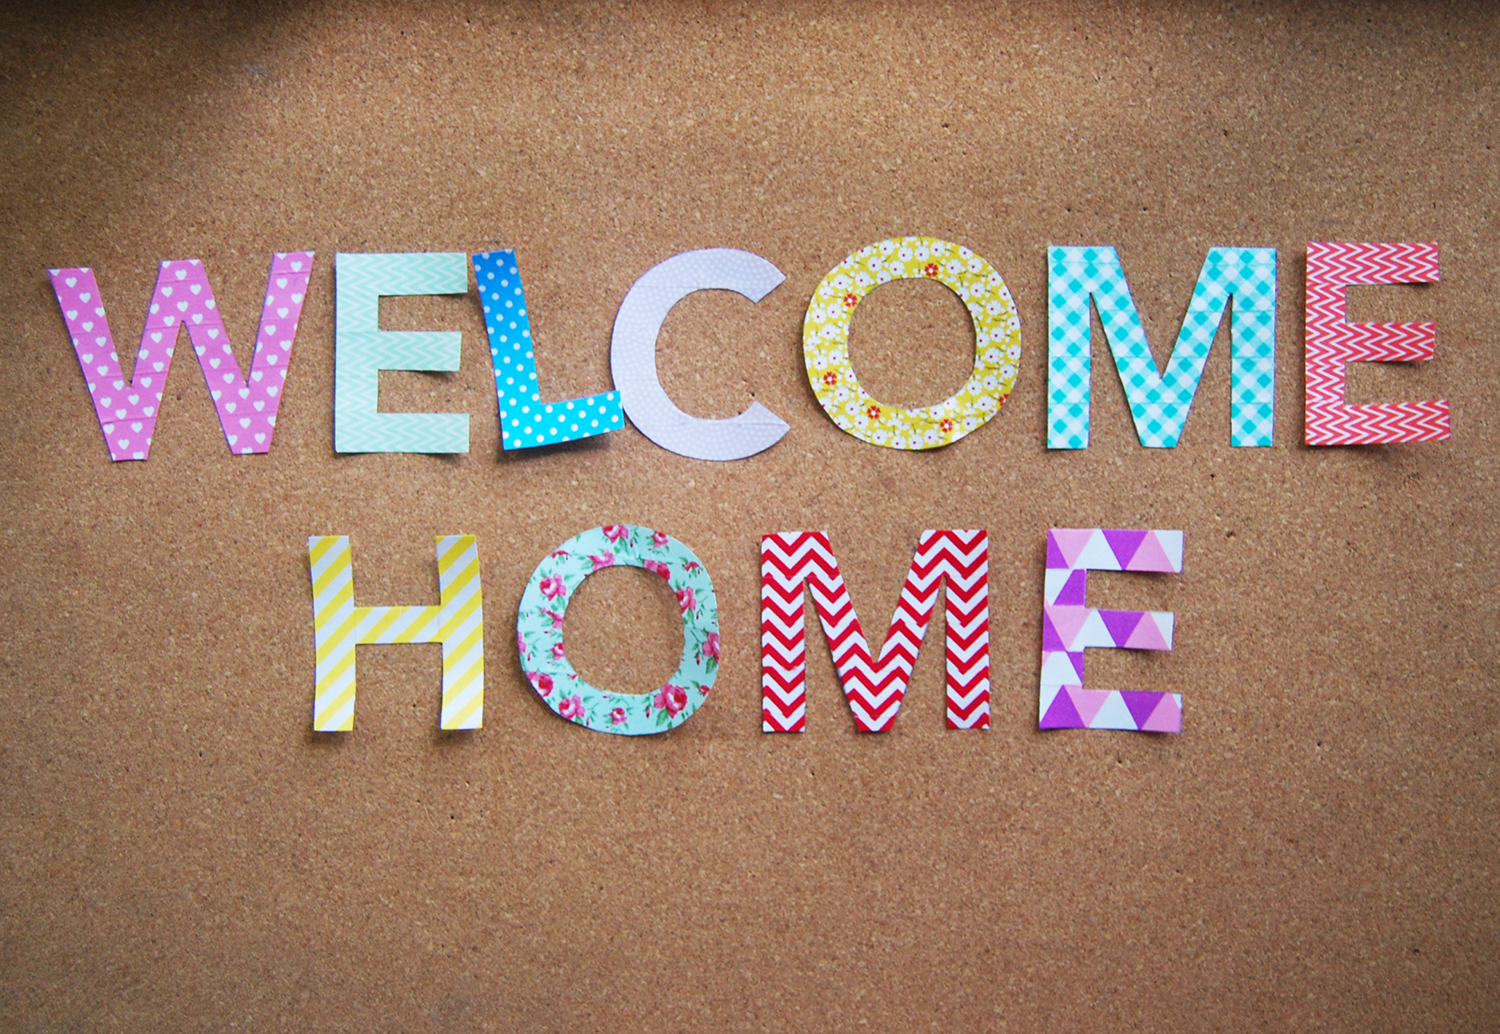 Mom welcome. Welcome. Картина Welcome Home. Идея надпись. Велком хом.